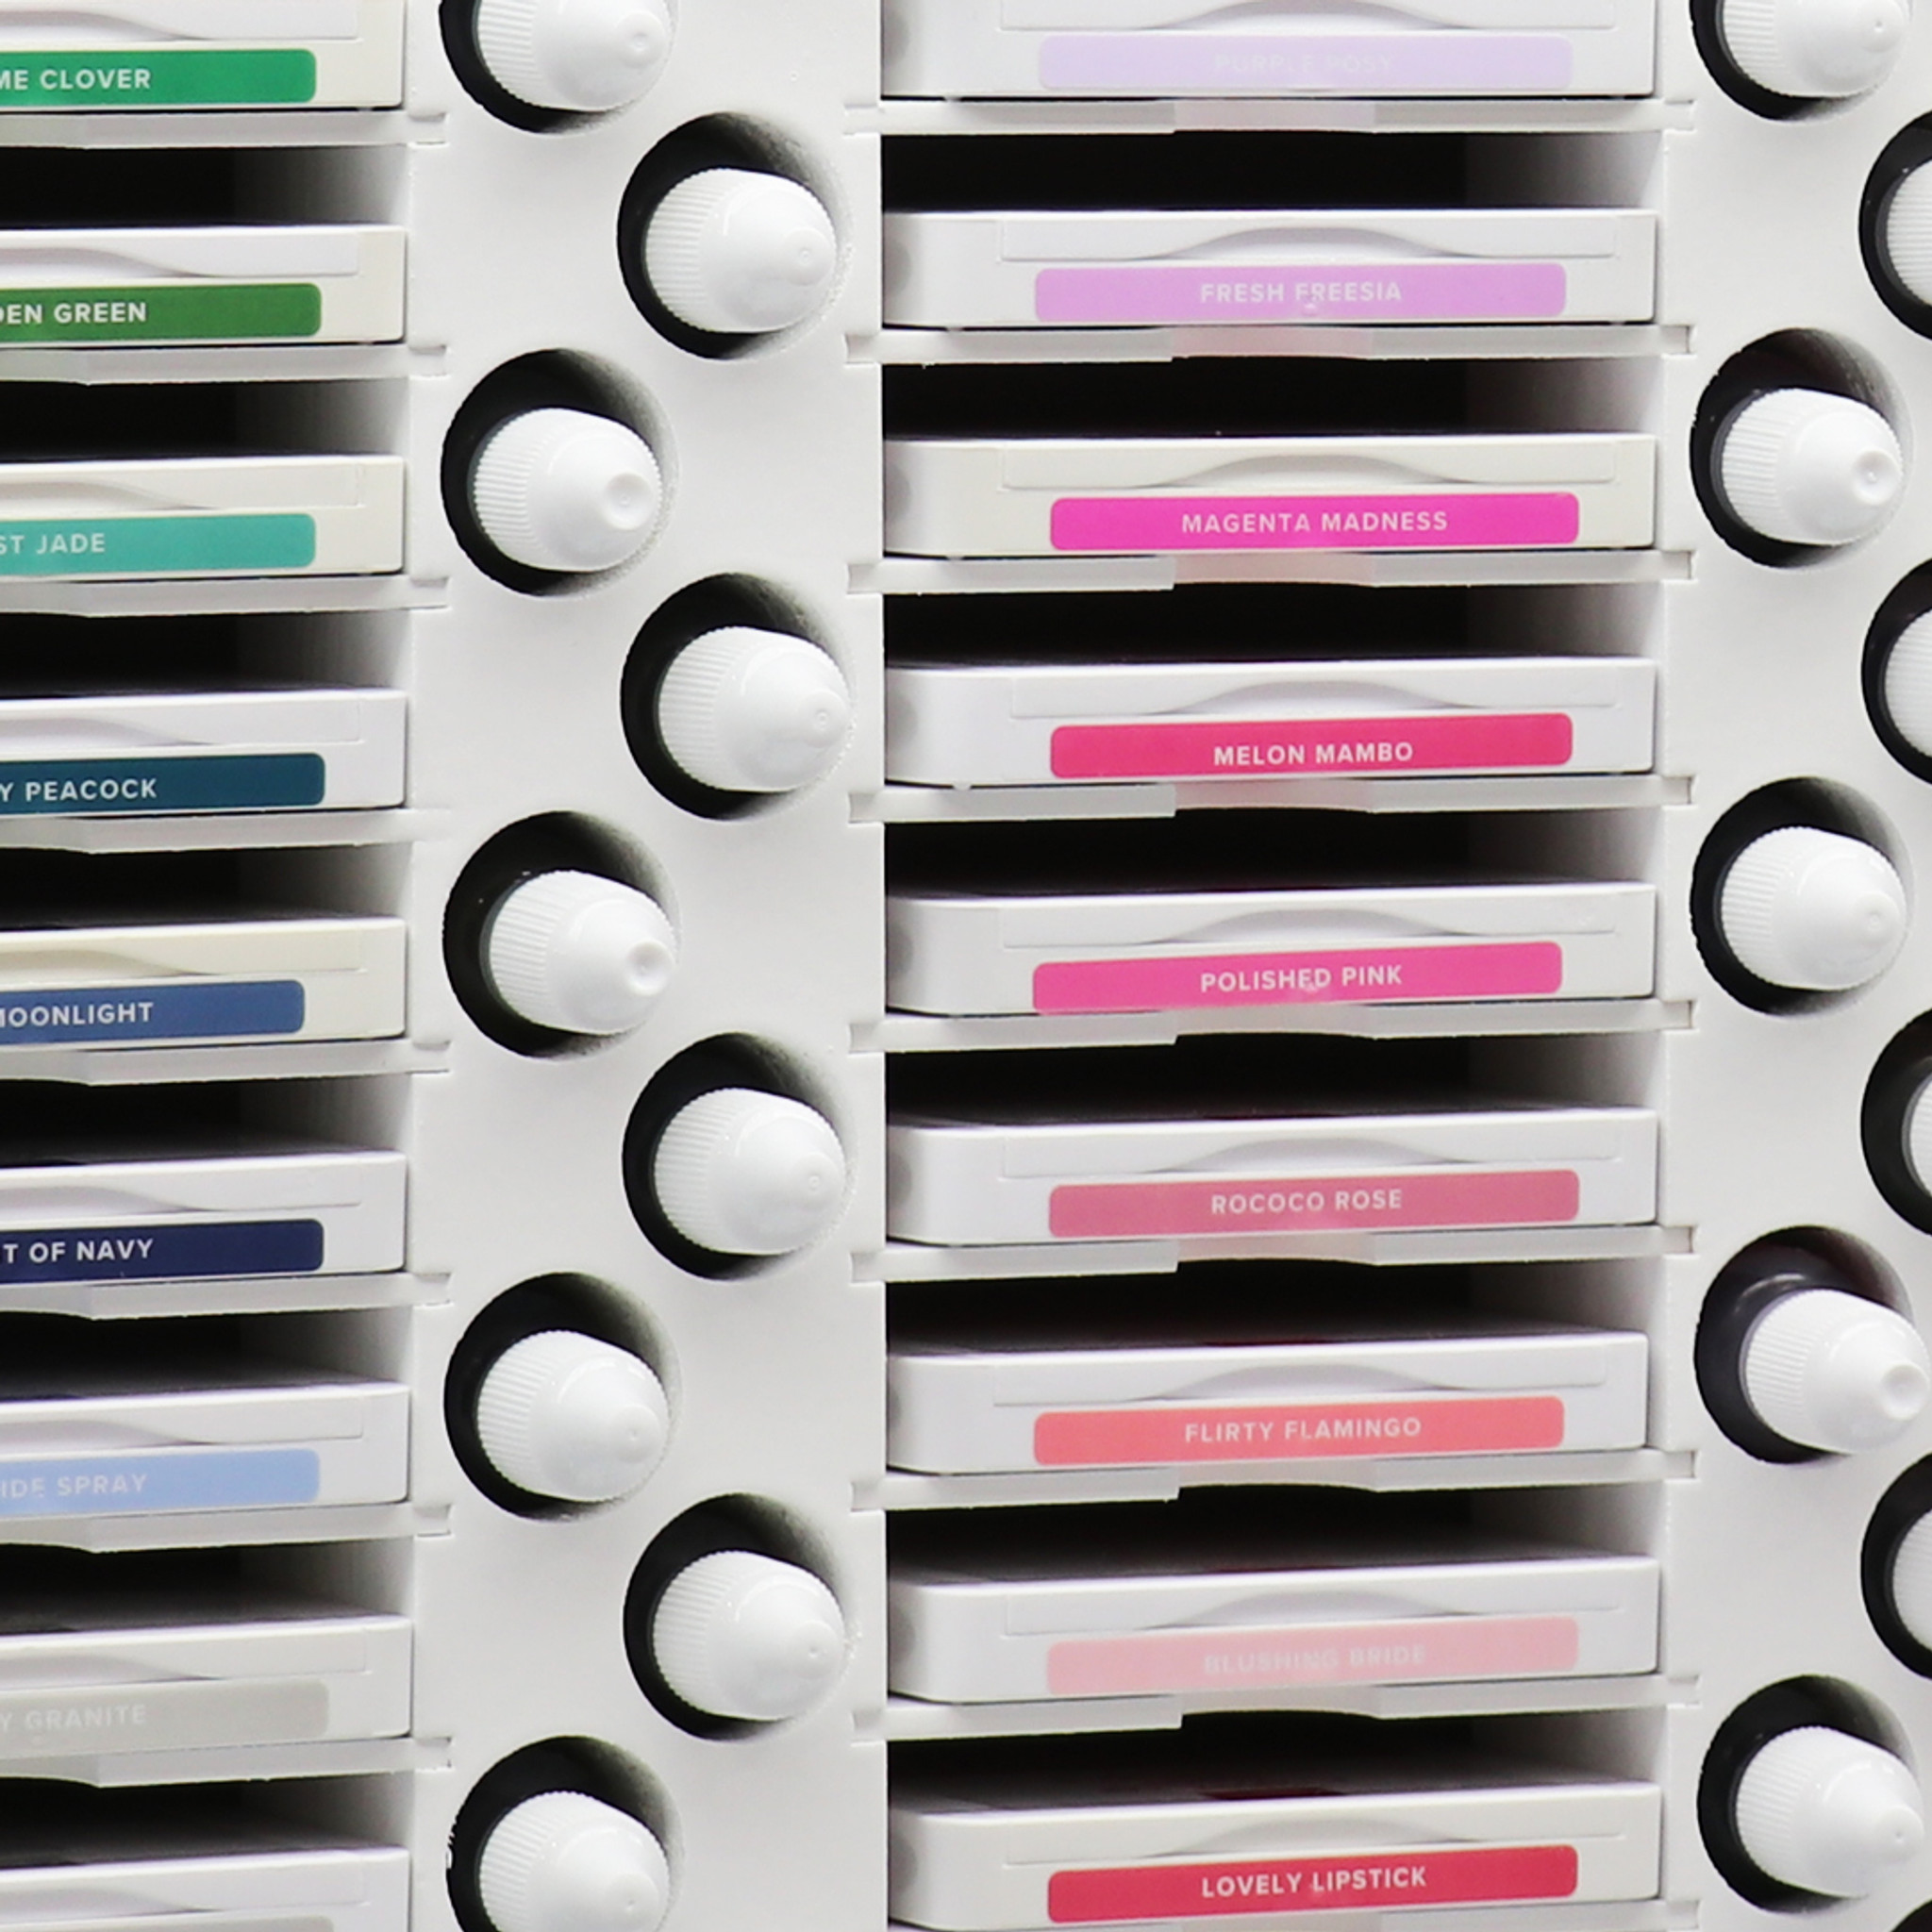 One Size Fits All Ink Pad Storage - Stamp-n-Storage